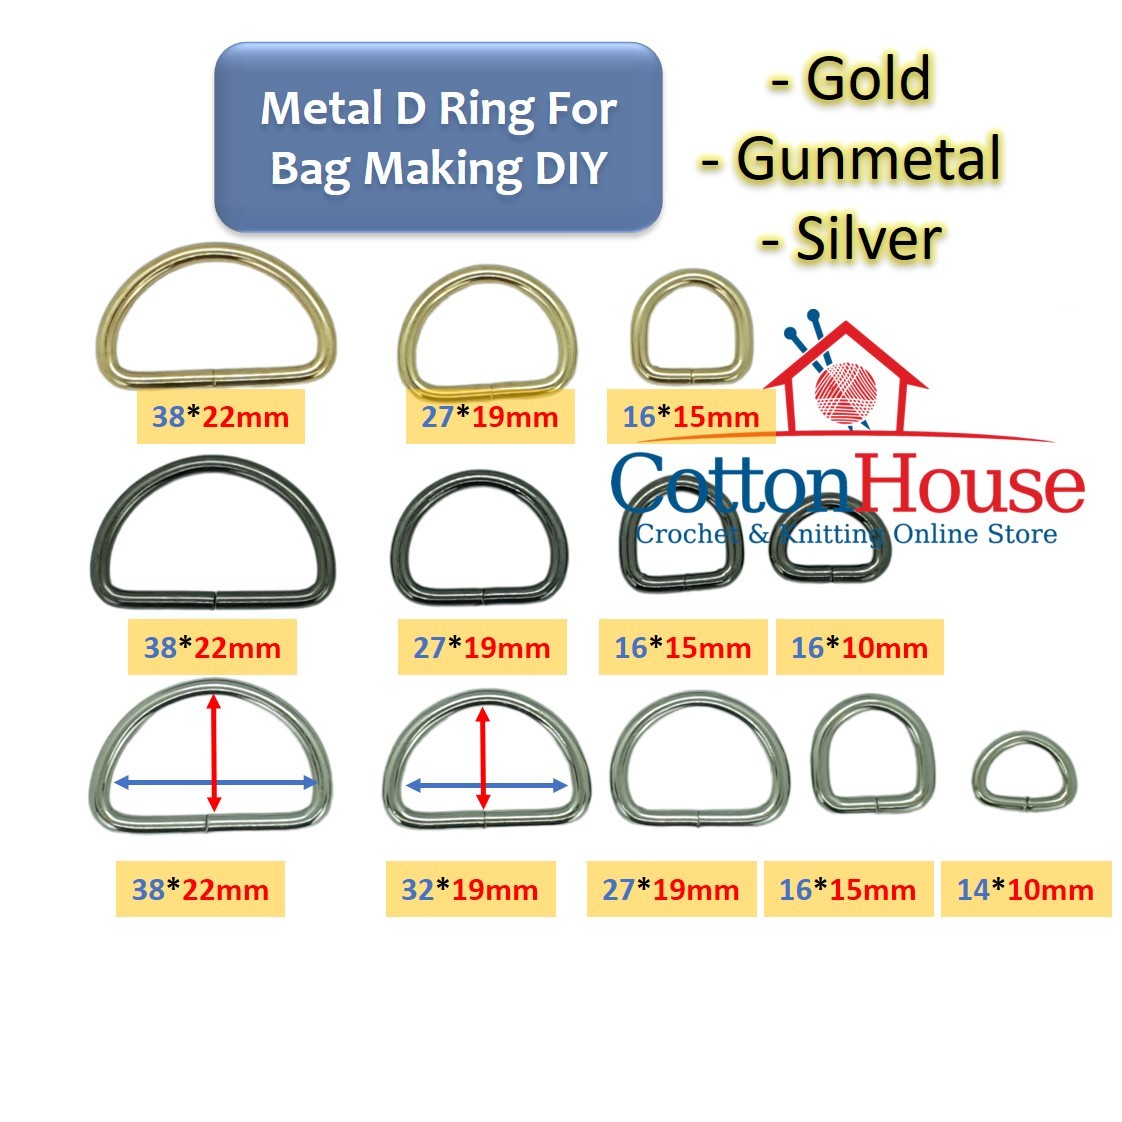 Metal D Ring 2pcs Pack Silver Gold Gunmetal DIY Bag Making Accessories Beg